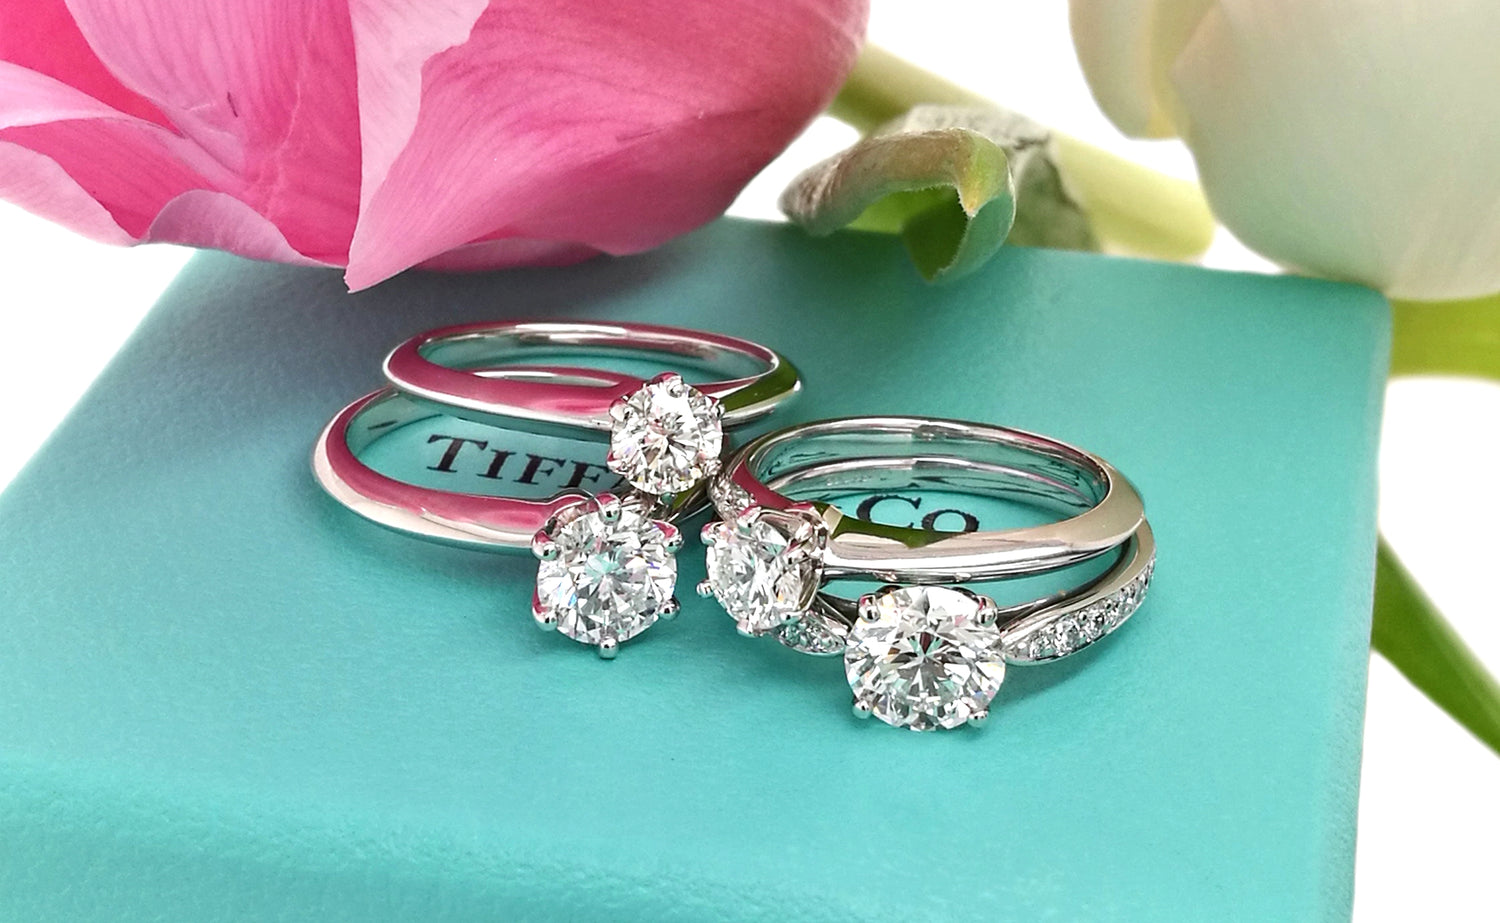 Tiffany & Co. Platinum 1.34ct Diamond Solitaire Engagement Ring | eBay